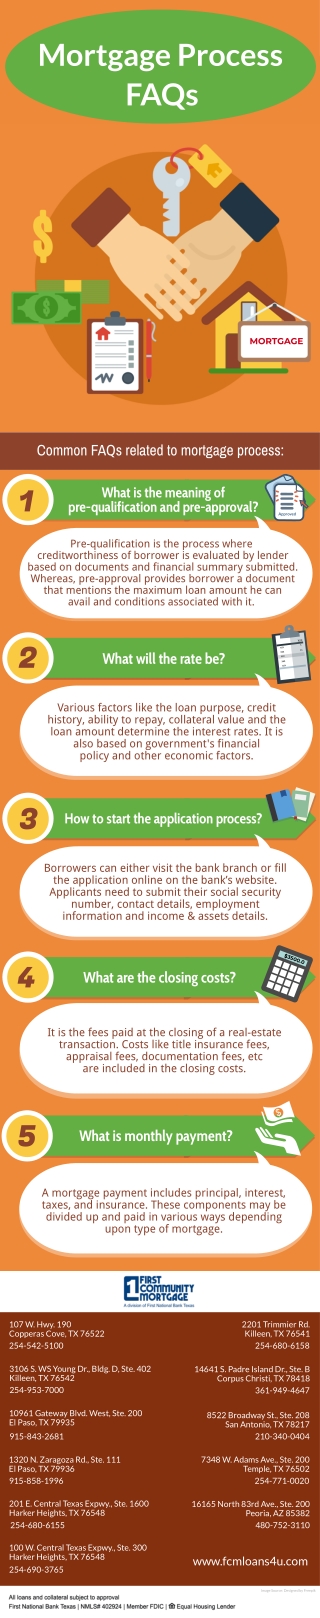 Mortgage Process FAQs